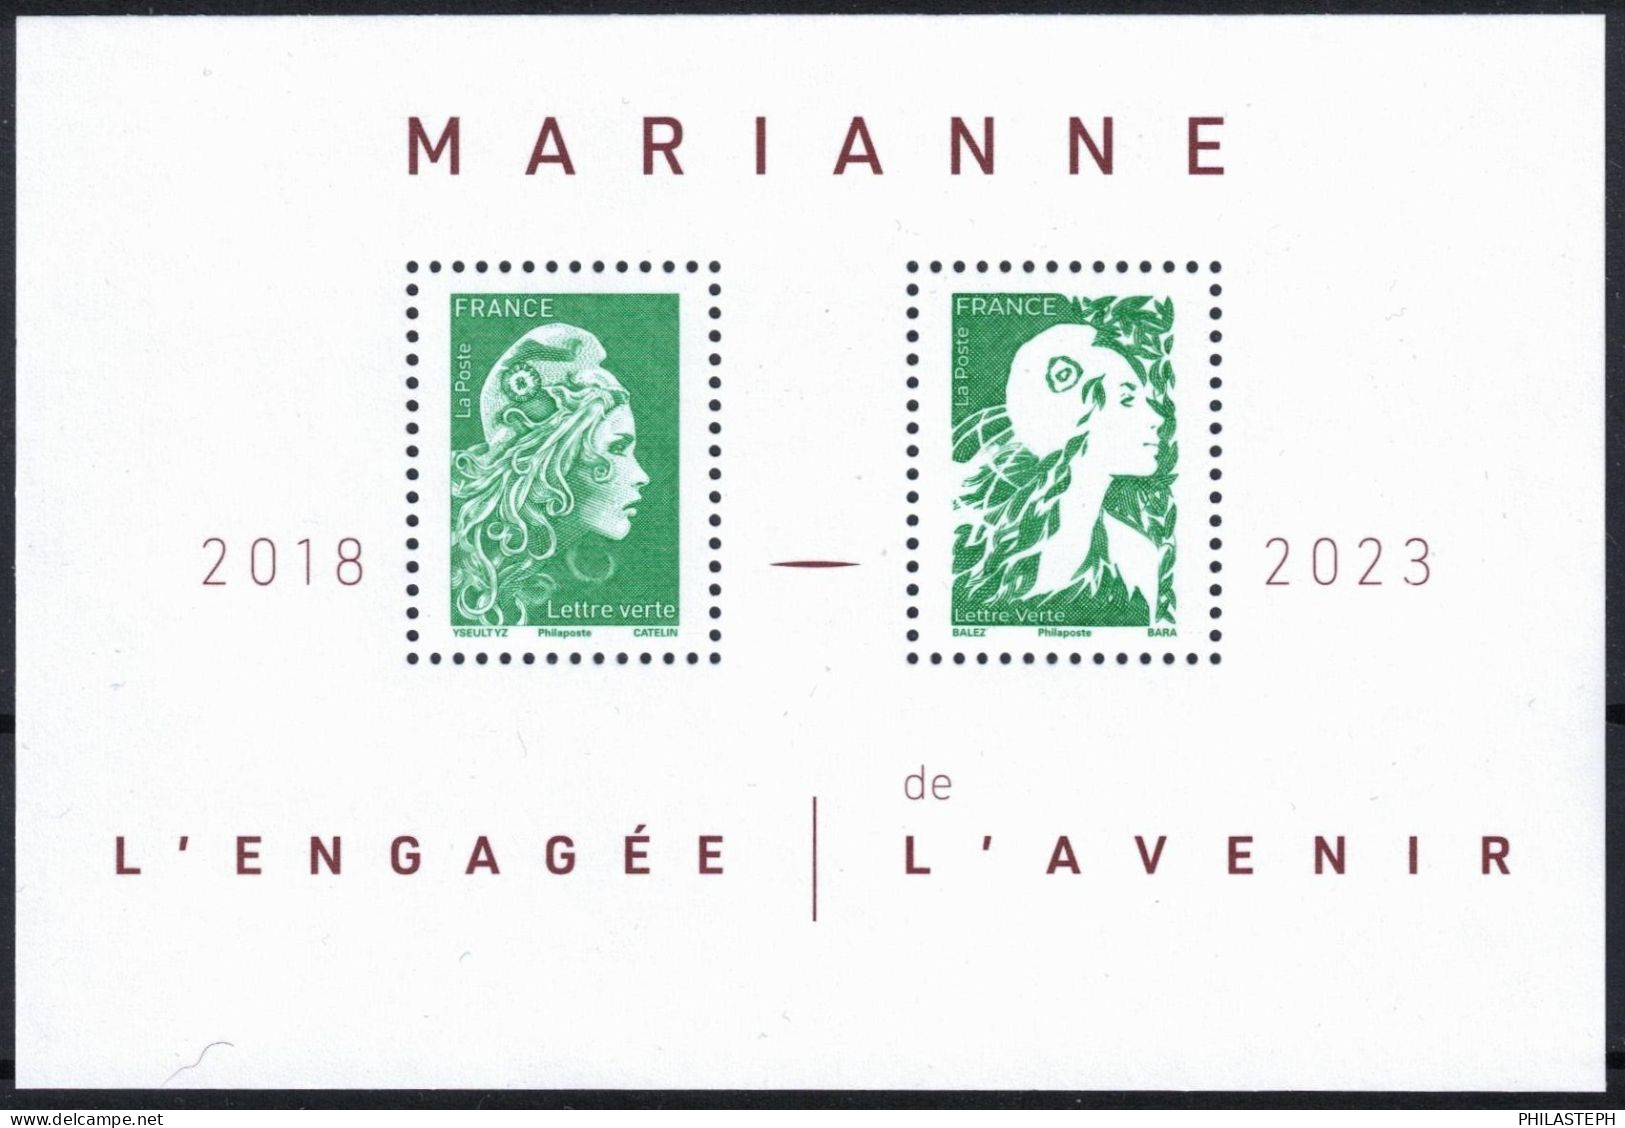 FRANCE 2024 -  Bloc Feuillet  LETTRE VERTE - MARIANNE L'ENGAGEE 2018 / MARIANNE DE L'AVENIR 2023 - BLOC YT 158 Neuf ** - Ongebruikt